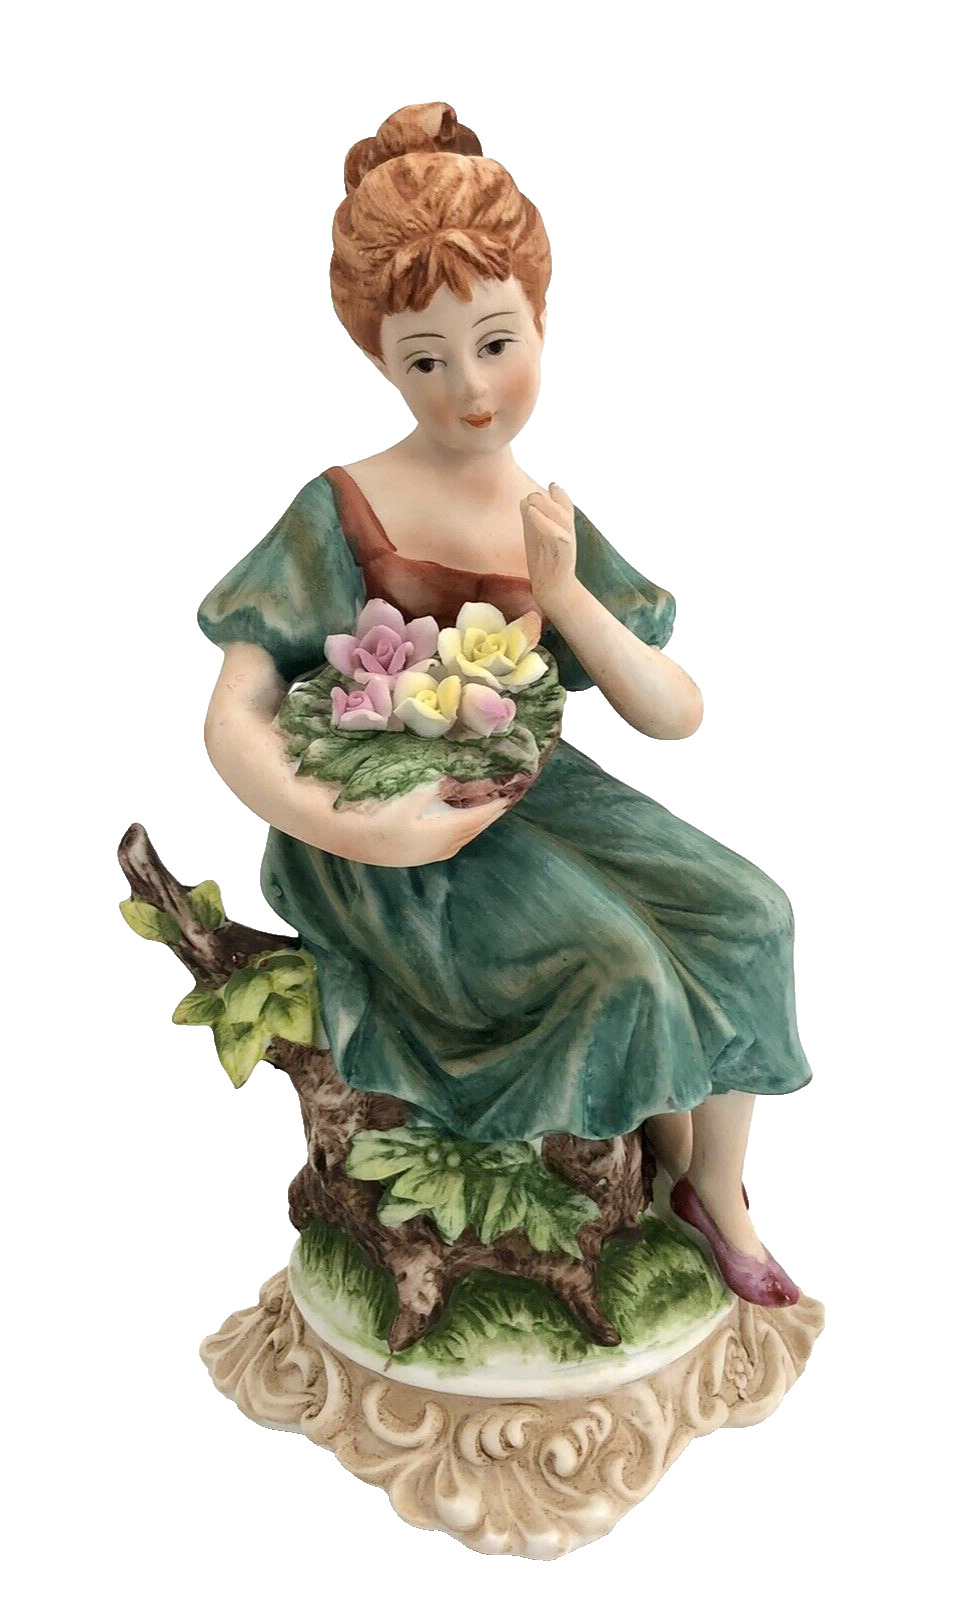 Vintage Lefton Hand Painted Sitting Girl Holding Flowers KW8017 Japan Figurine